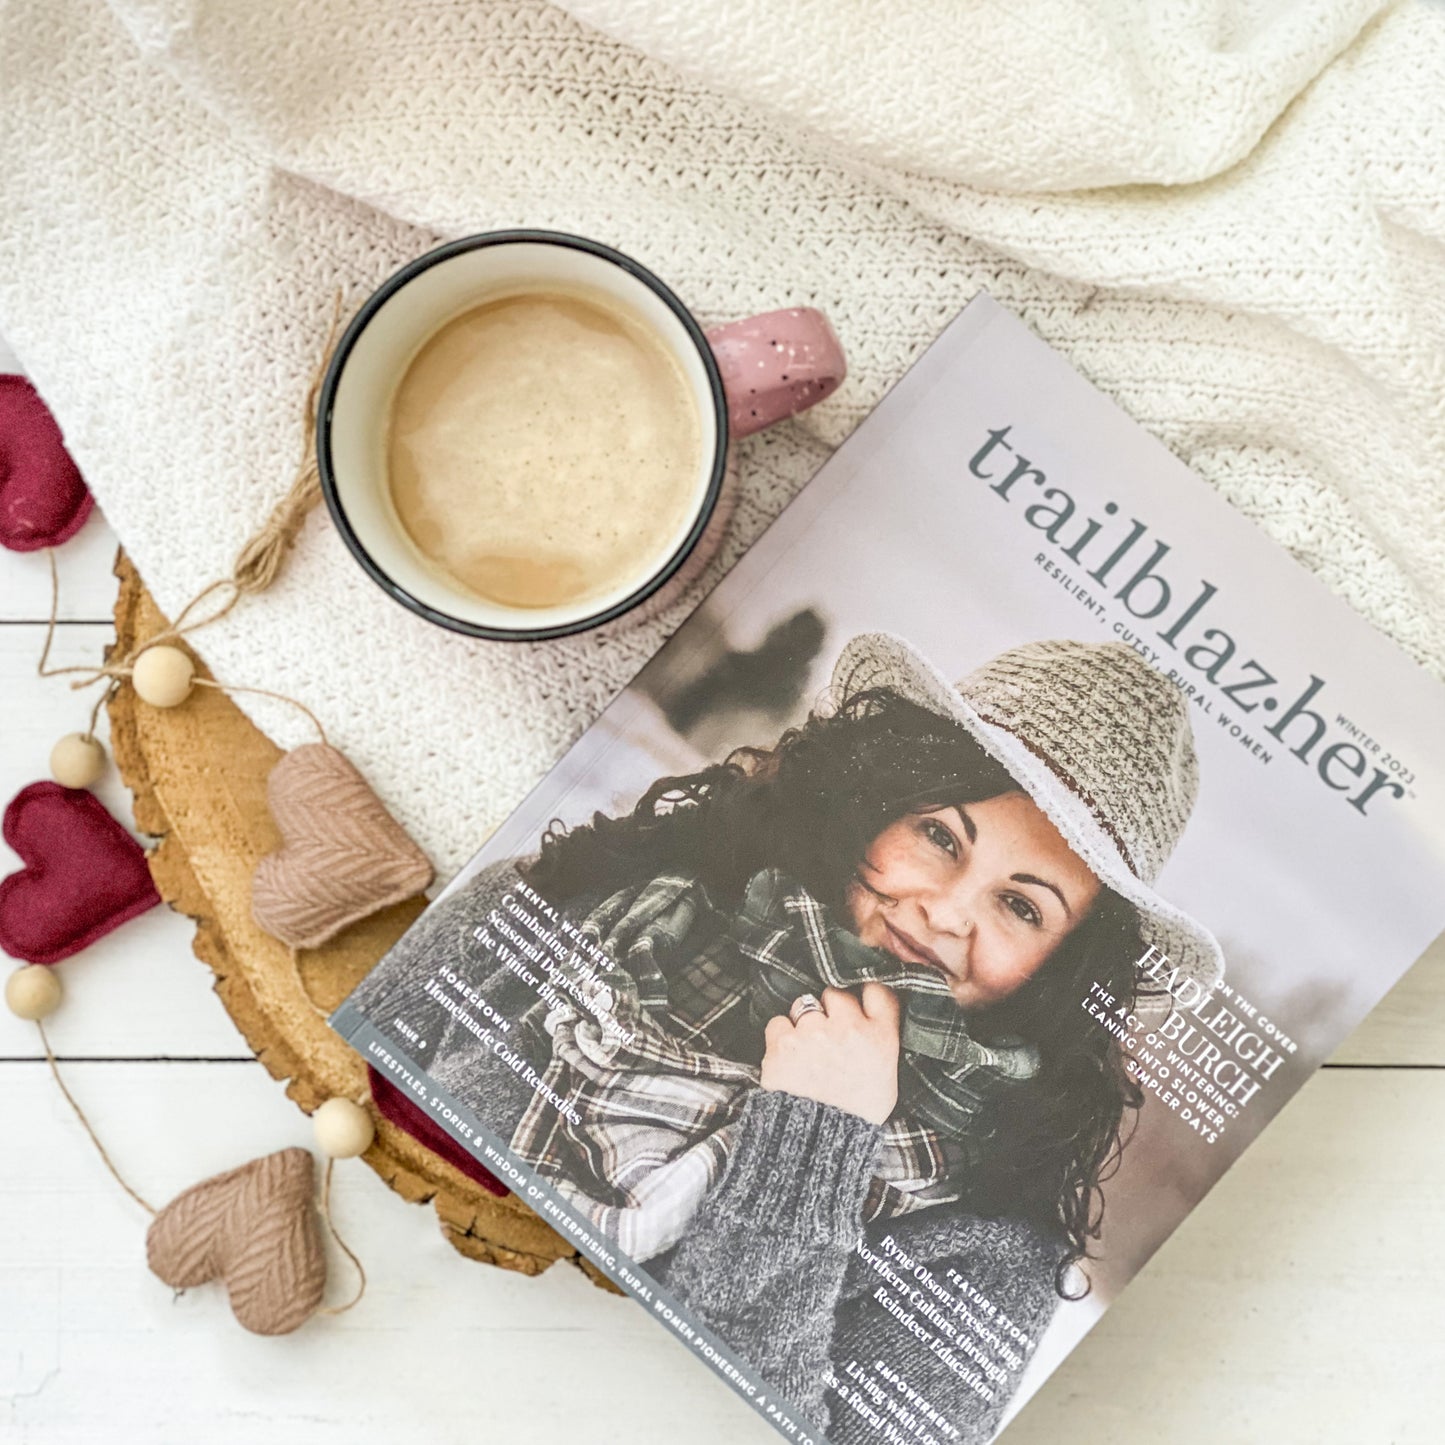 Trailblazer Magazine flat lay next to mug of coffee and garland with hearts